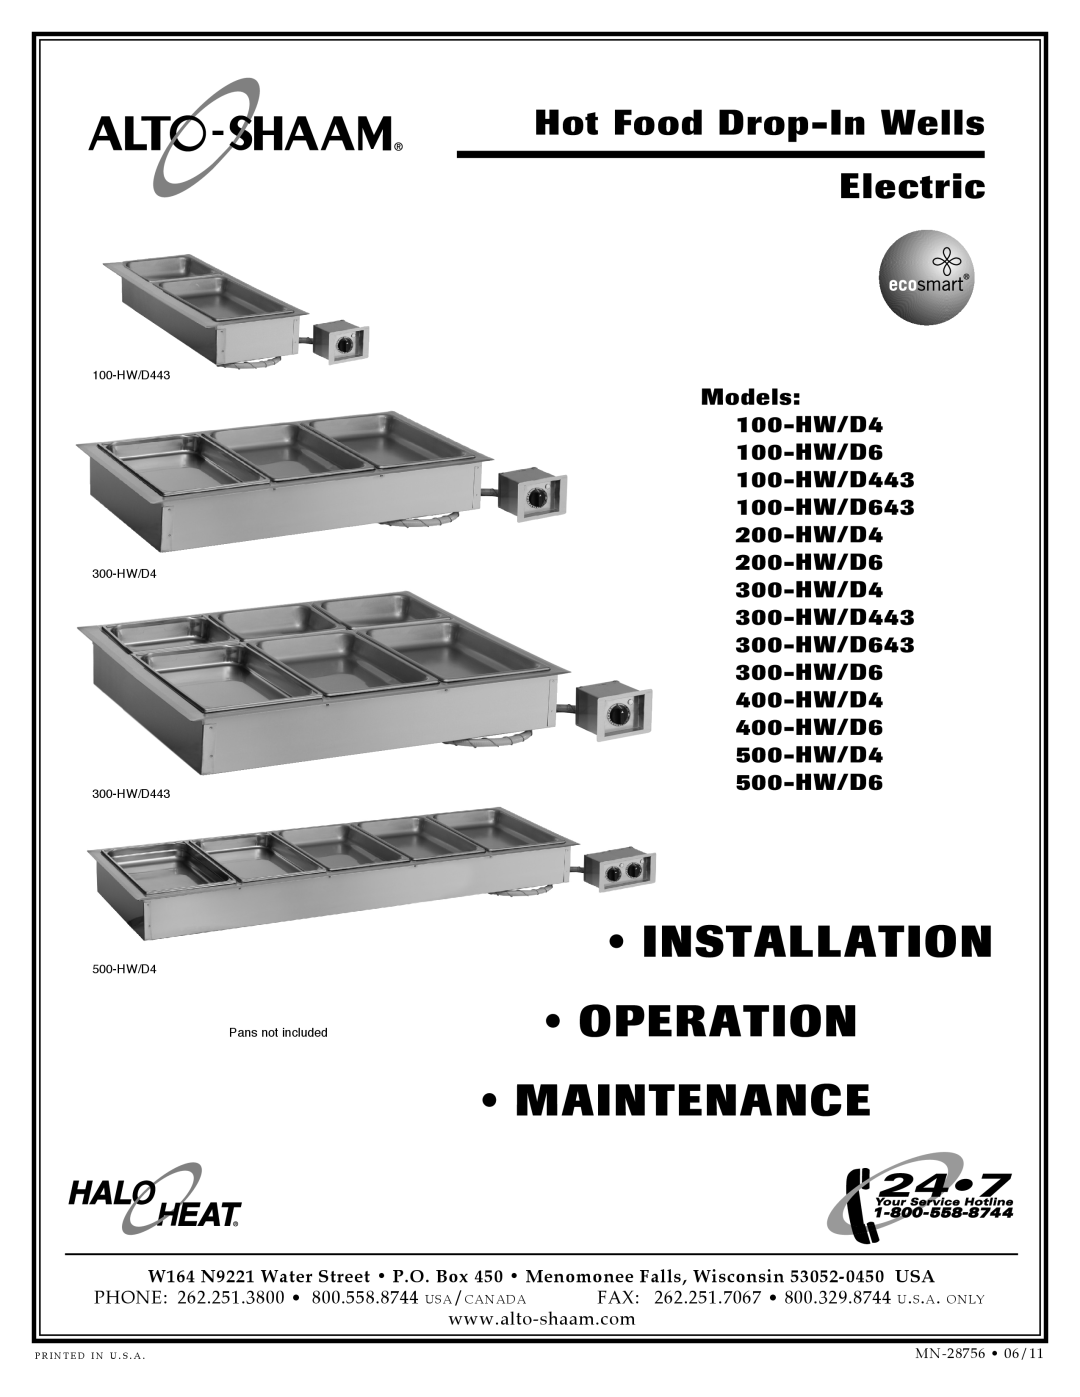 Alto-Shaam 400-HW/D6, 400-HW/D4, 300-HW/D643 manual Installation, Operation, Maintenance, Hot Food Drop-In Wells, Electric 